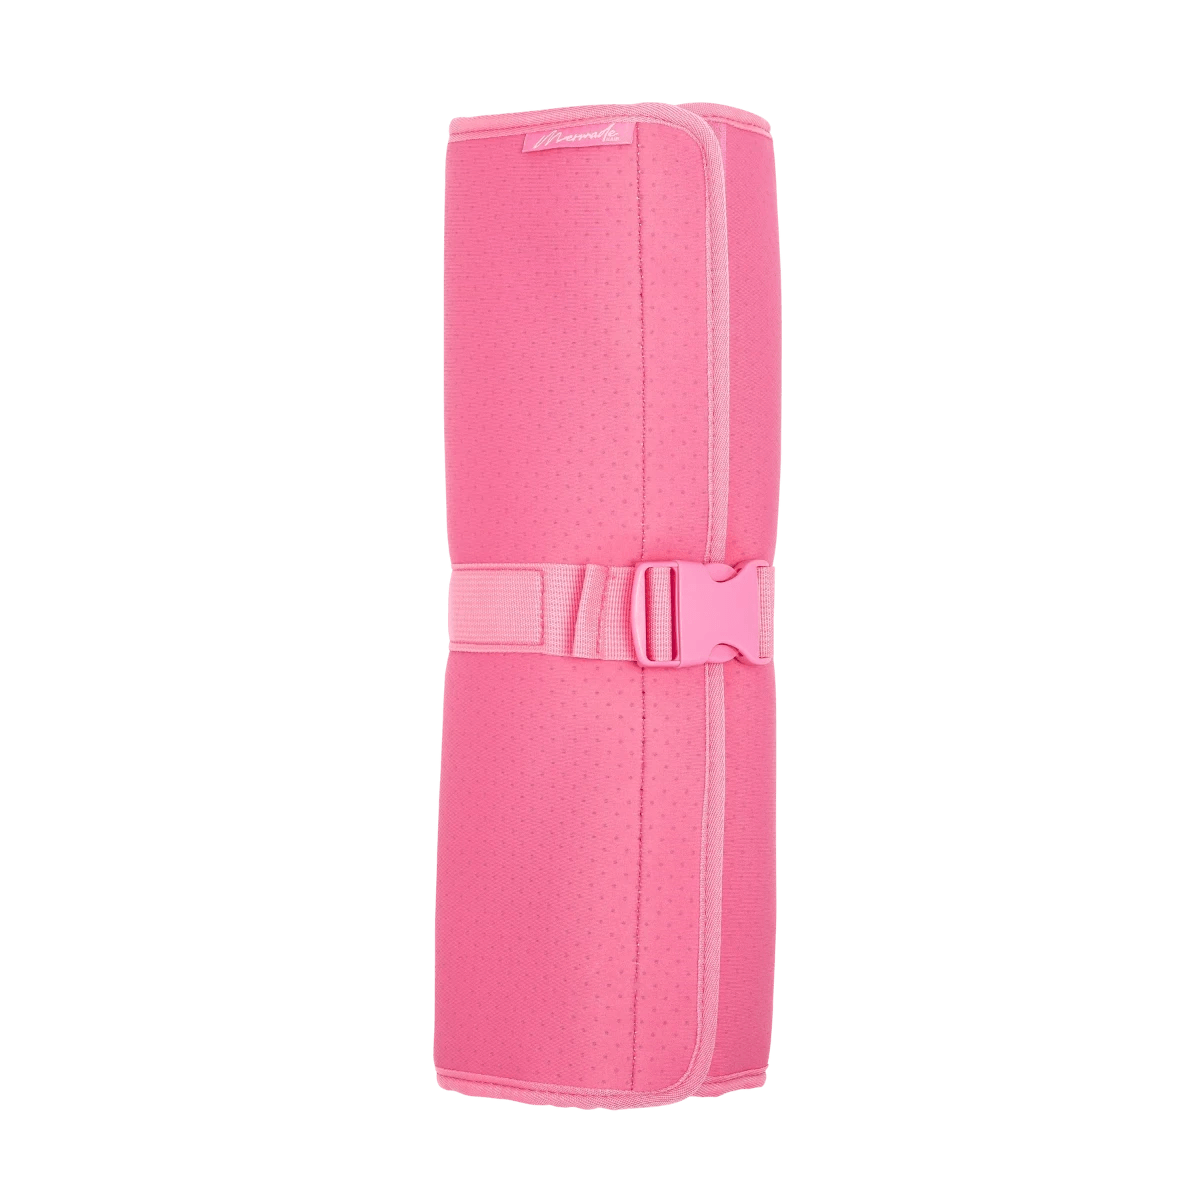 Heat Mat and Clutch (Pink)